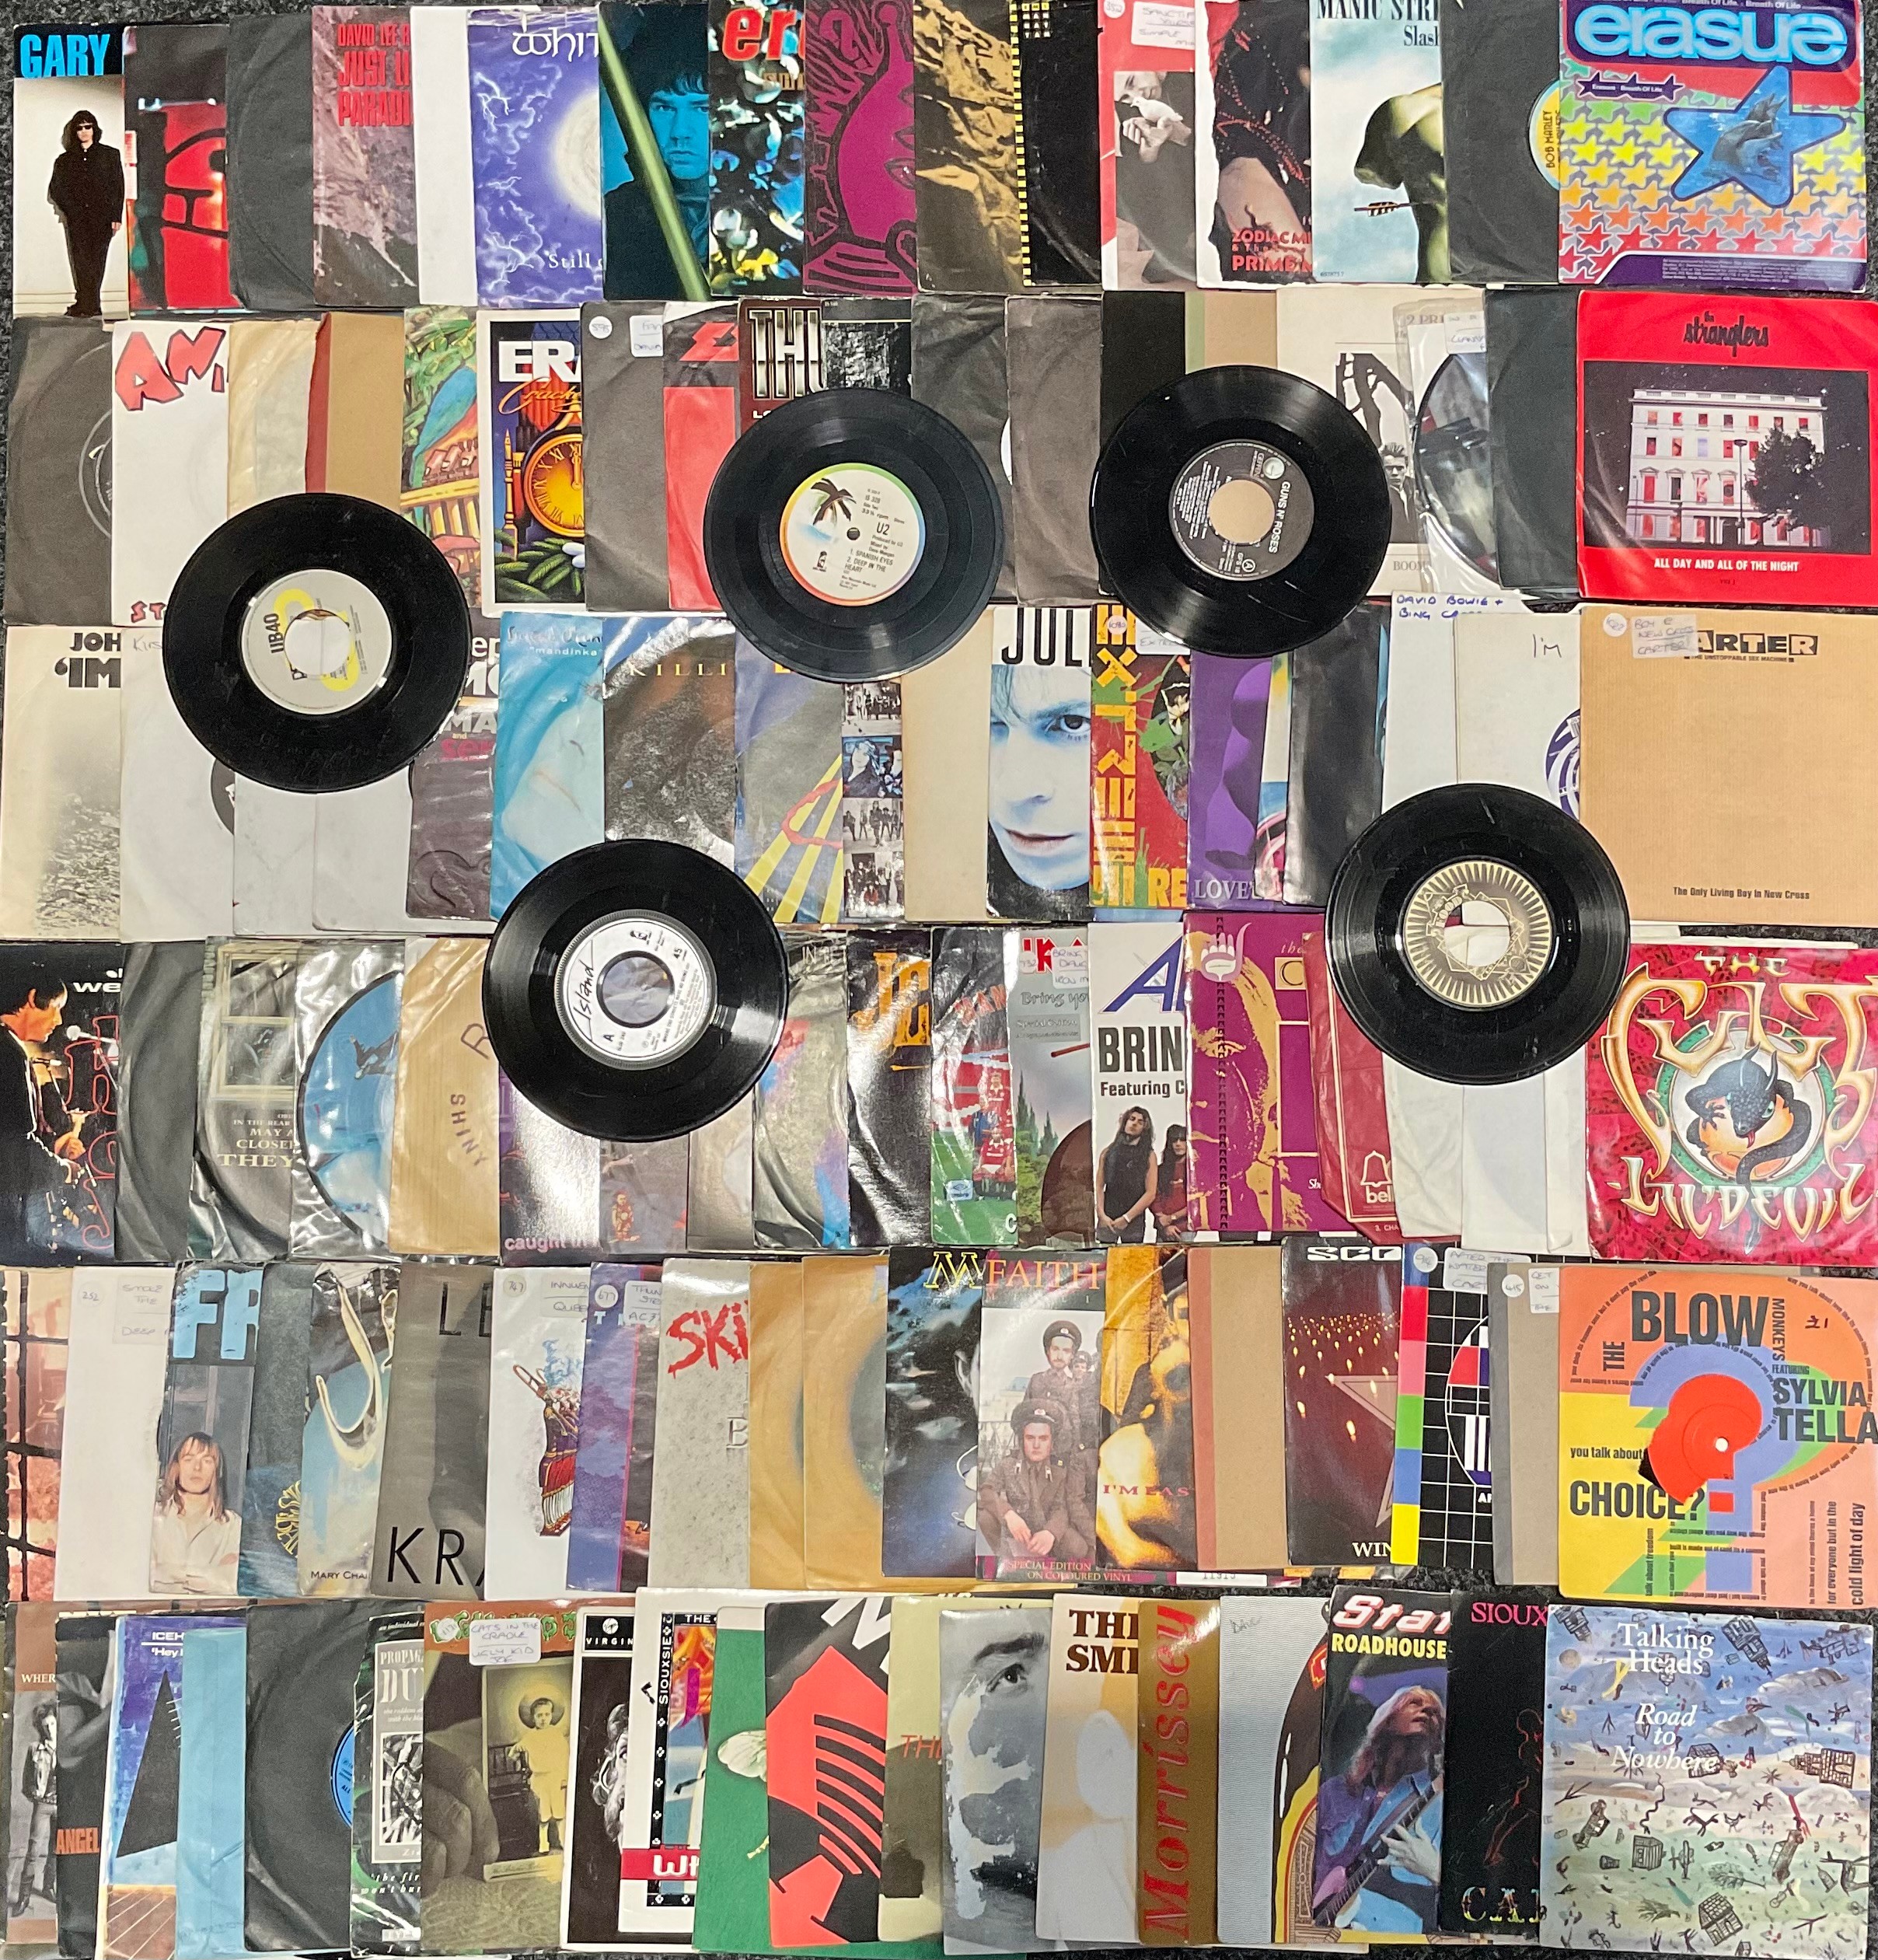 Vinyl records- 7” singles including The Smiths; Morrisey; Depeche Mode; Carter USM; Choir Boys; Iron